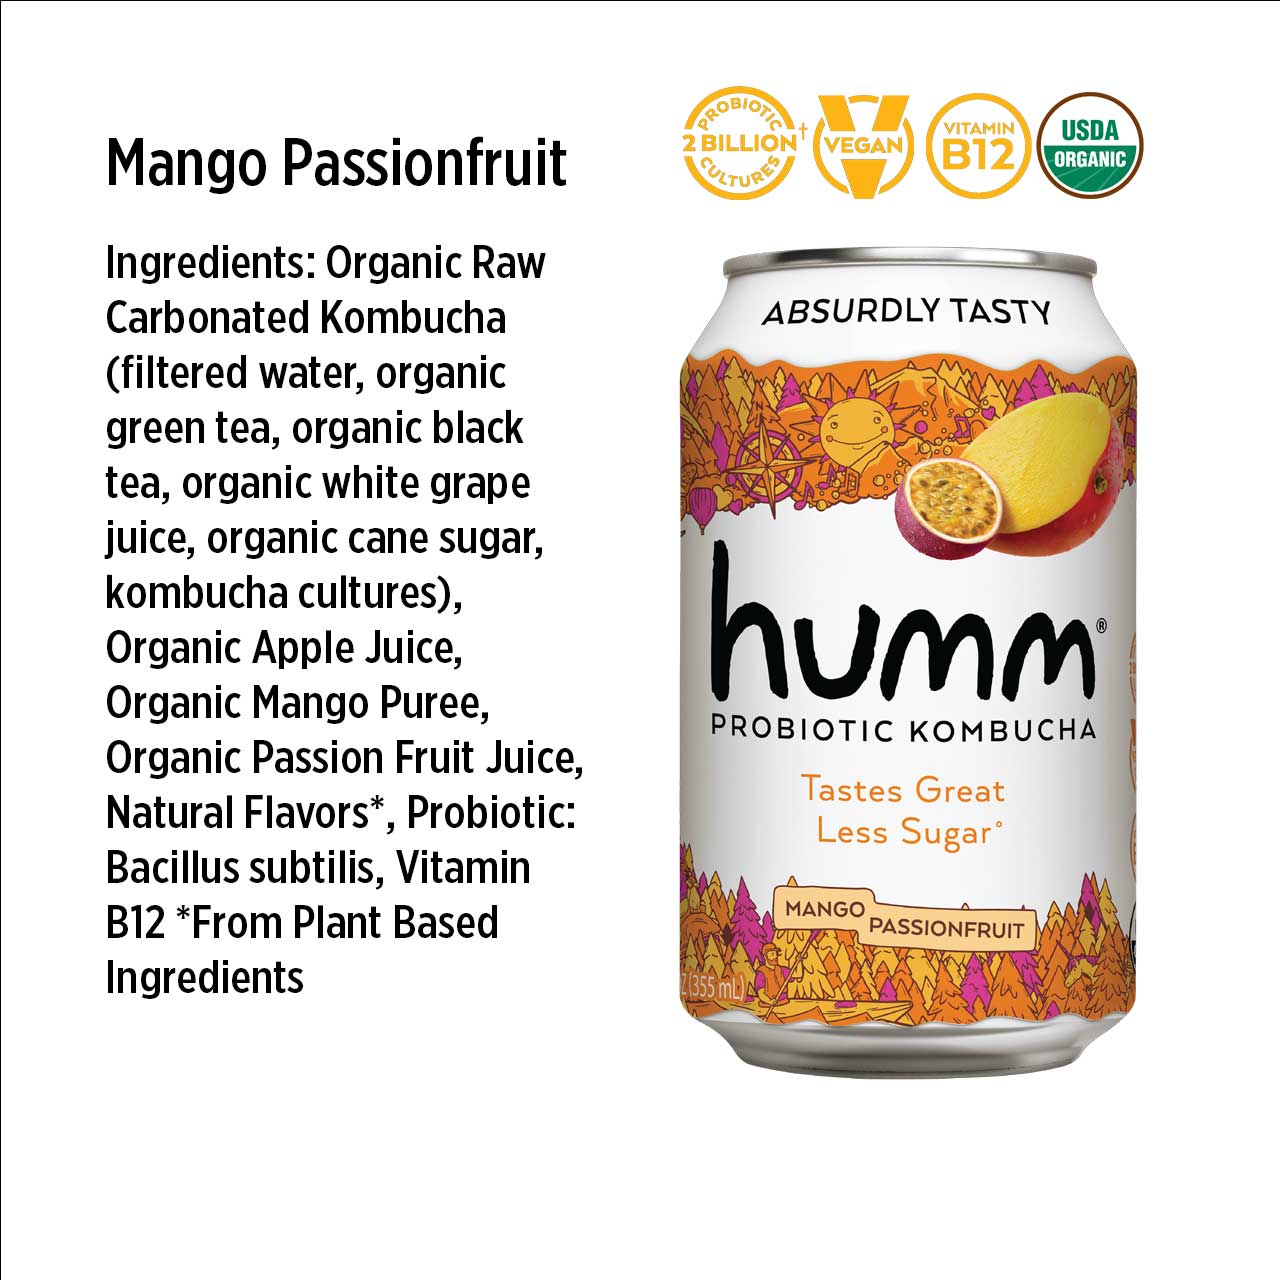 mango passionfruit ingredients